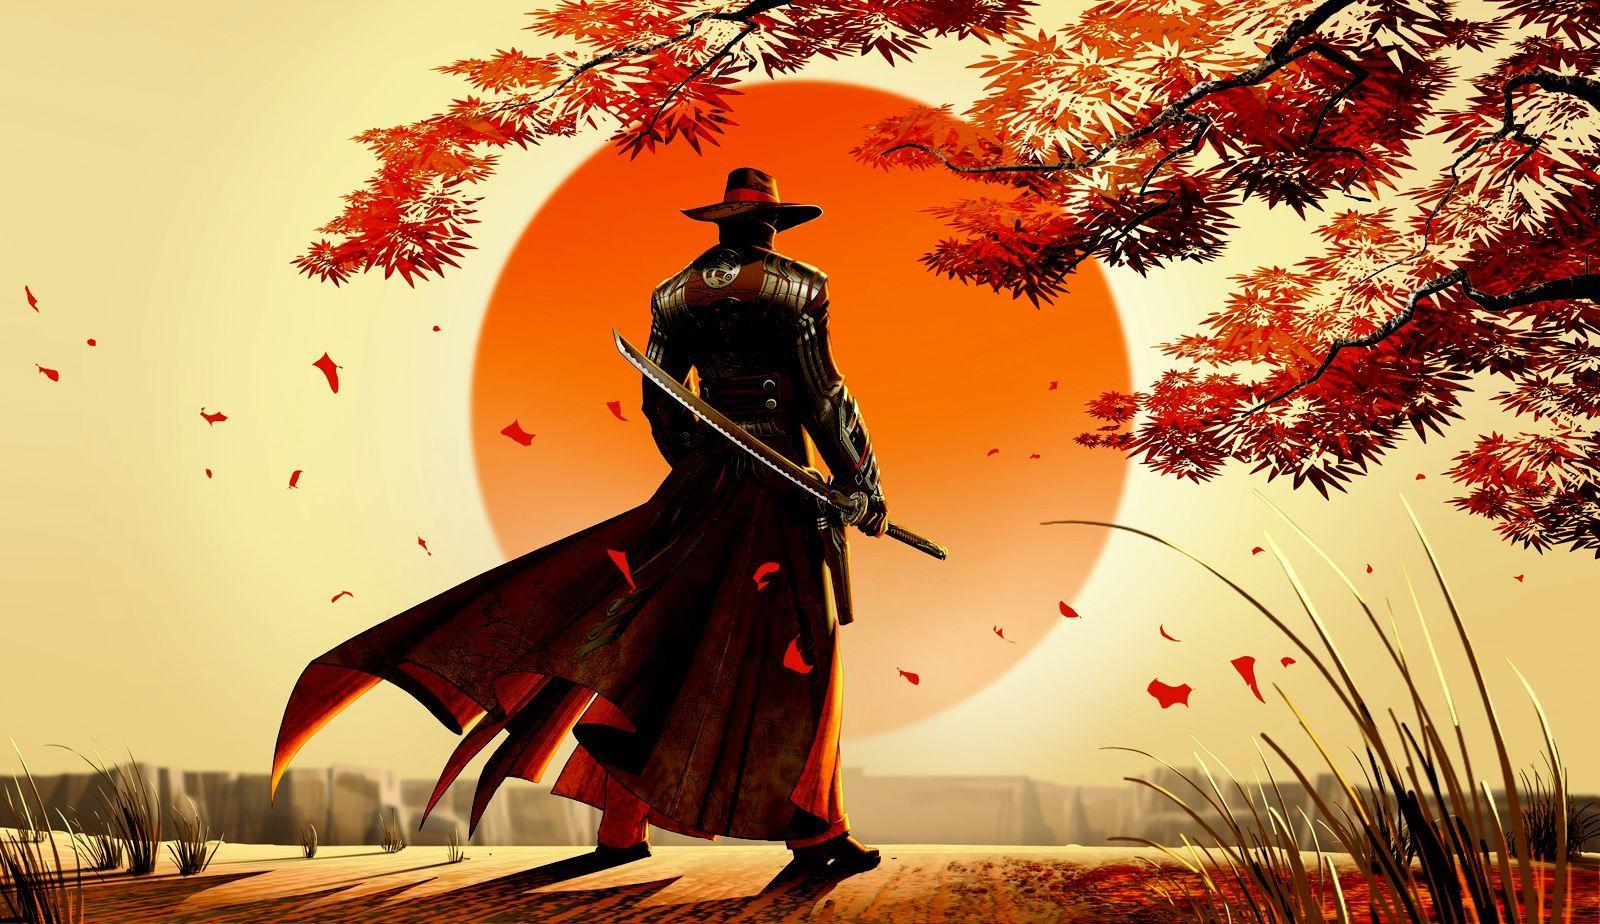 Cool 3D Samurai Wallpaper Picture 12252 High Resolution. hh